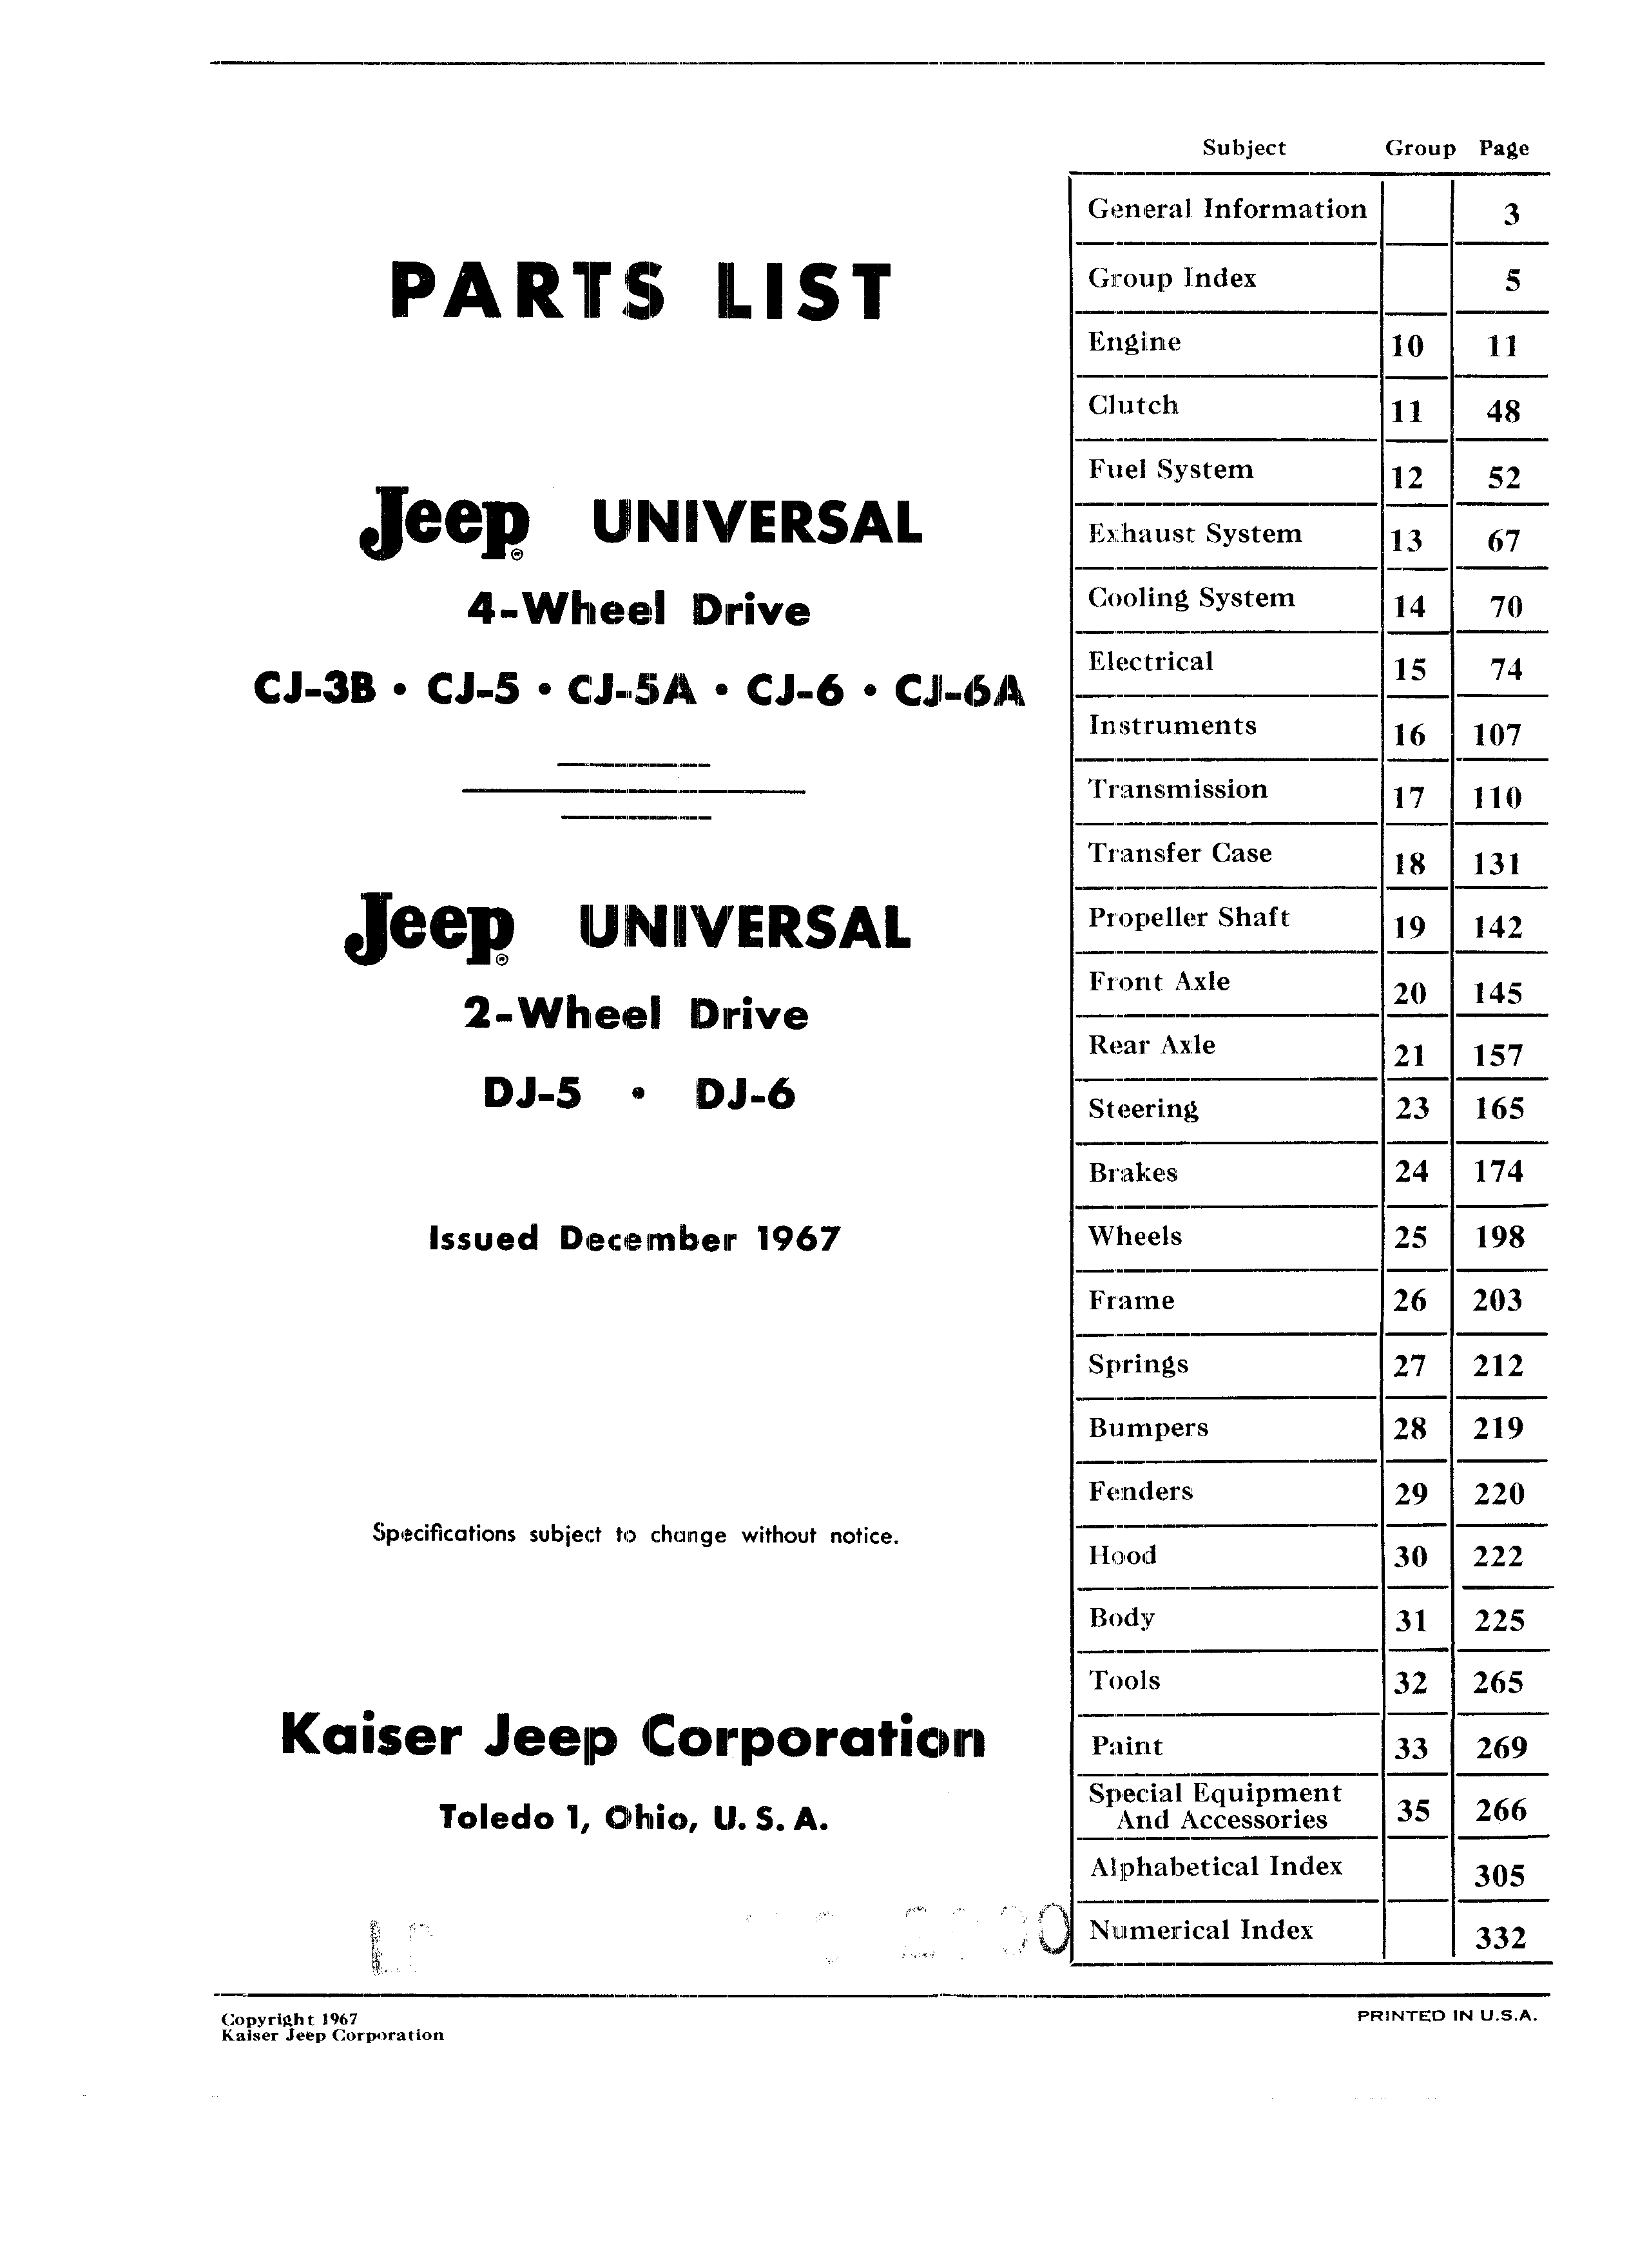 Jeep Universal Parts List December 1967